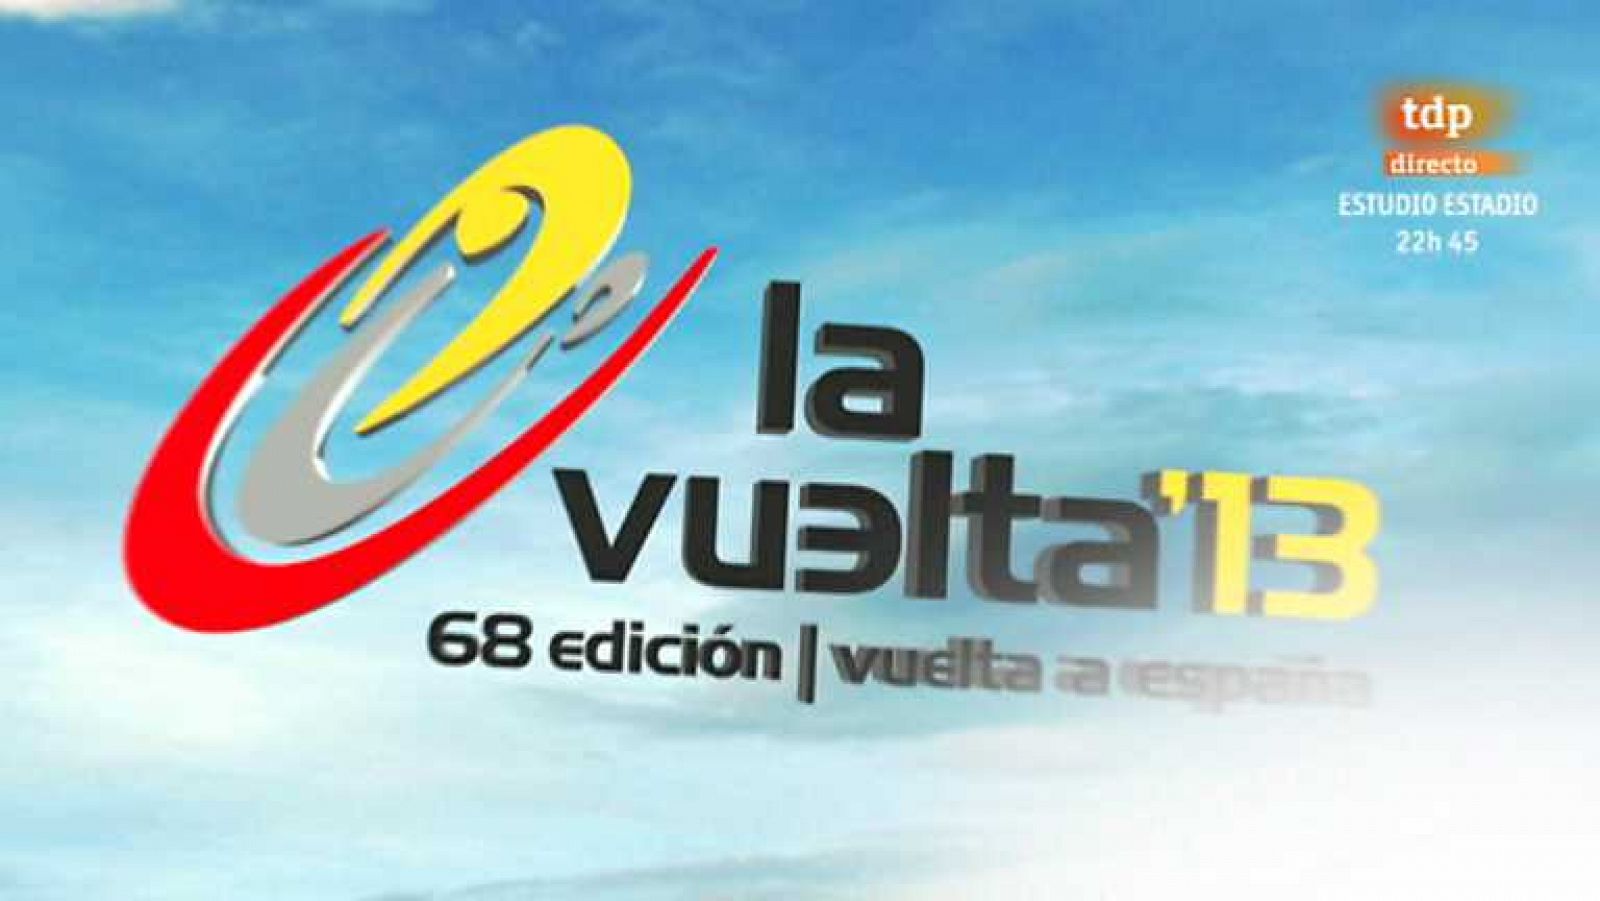 Ciclismo - Presentación de la Vuelta ciclista a España 2013